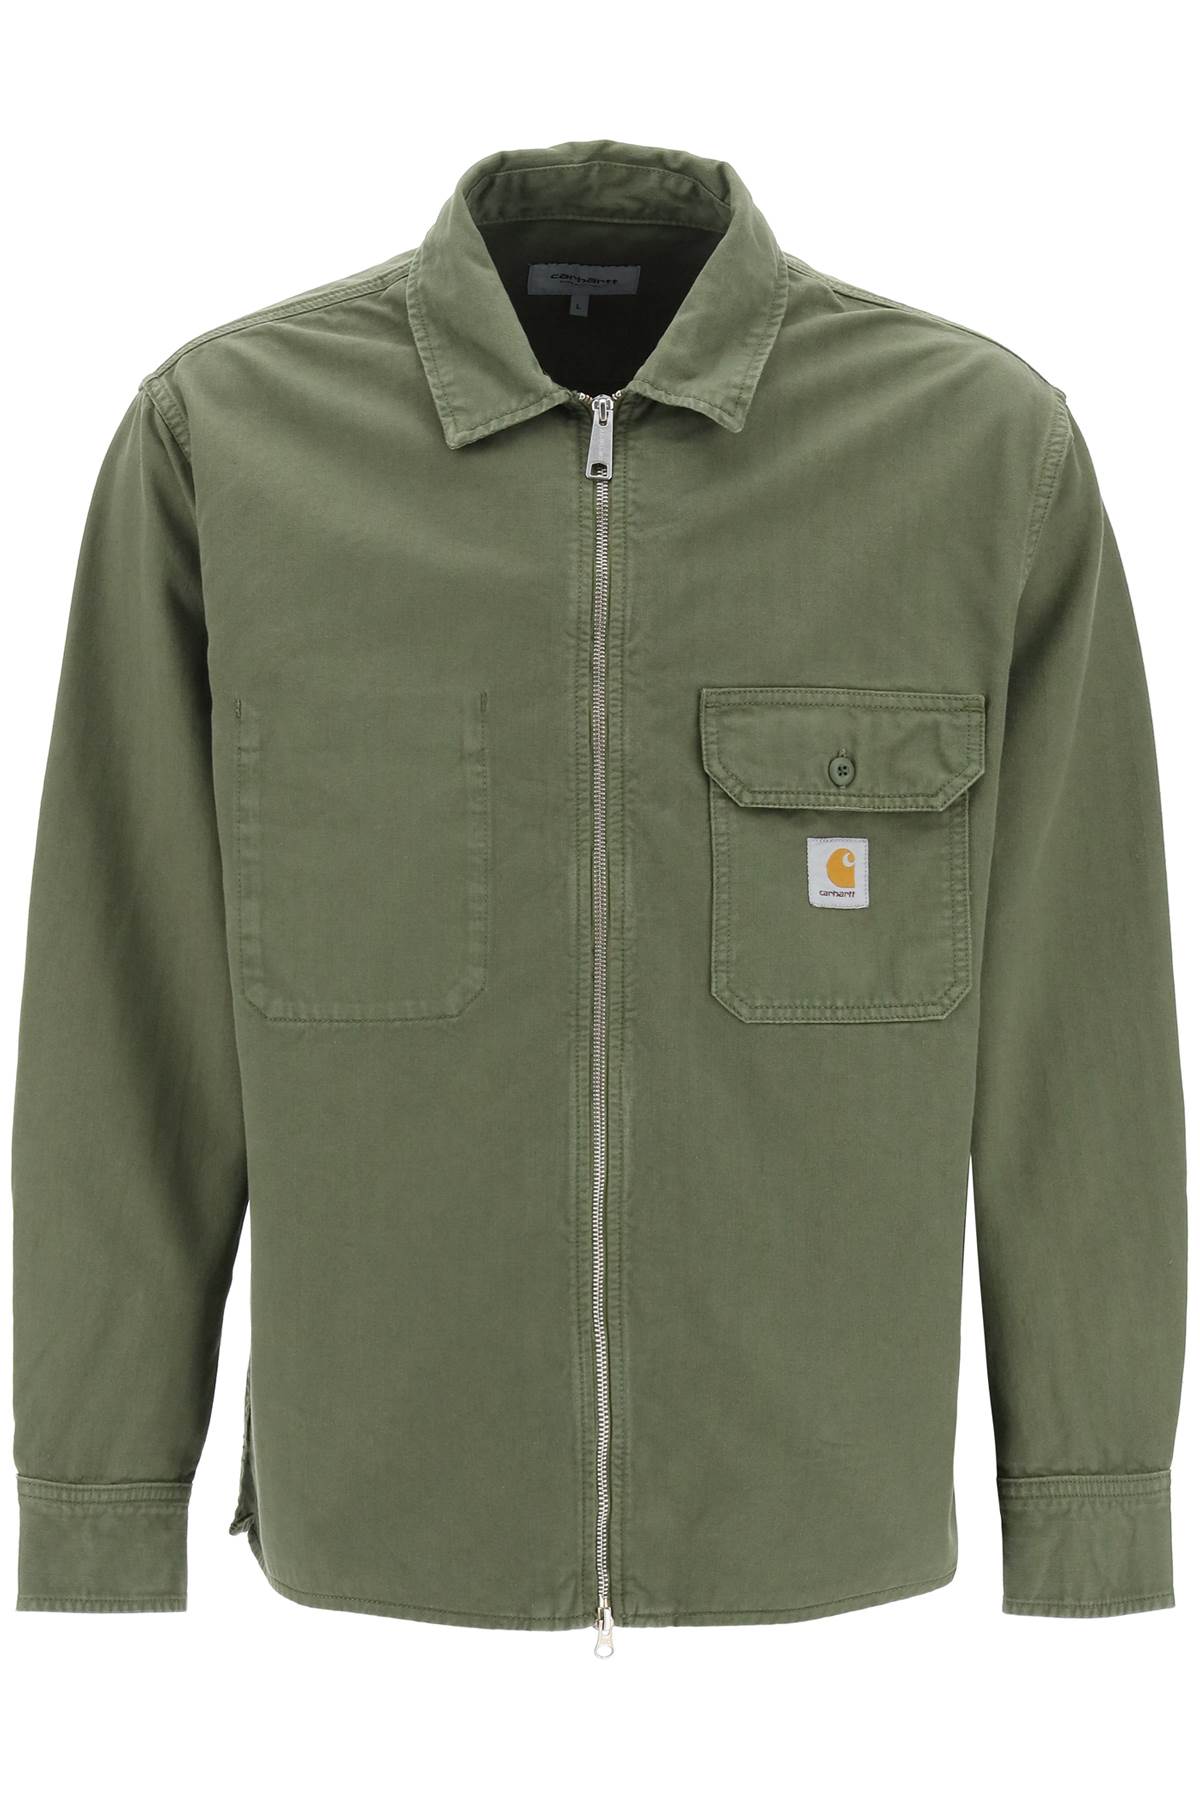 Carhartt wip rainer overshirt shirt-men > clothing > jackets > casual jackets-Carhartt Wip-Urbanheer